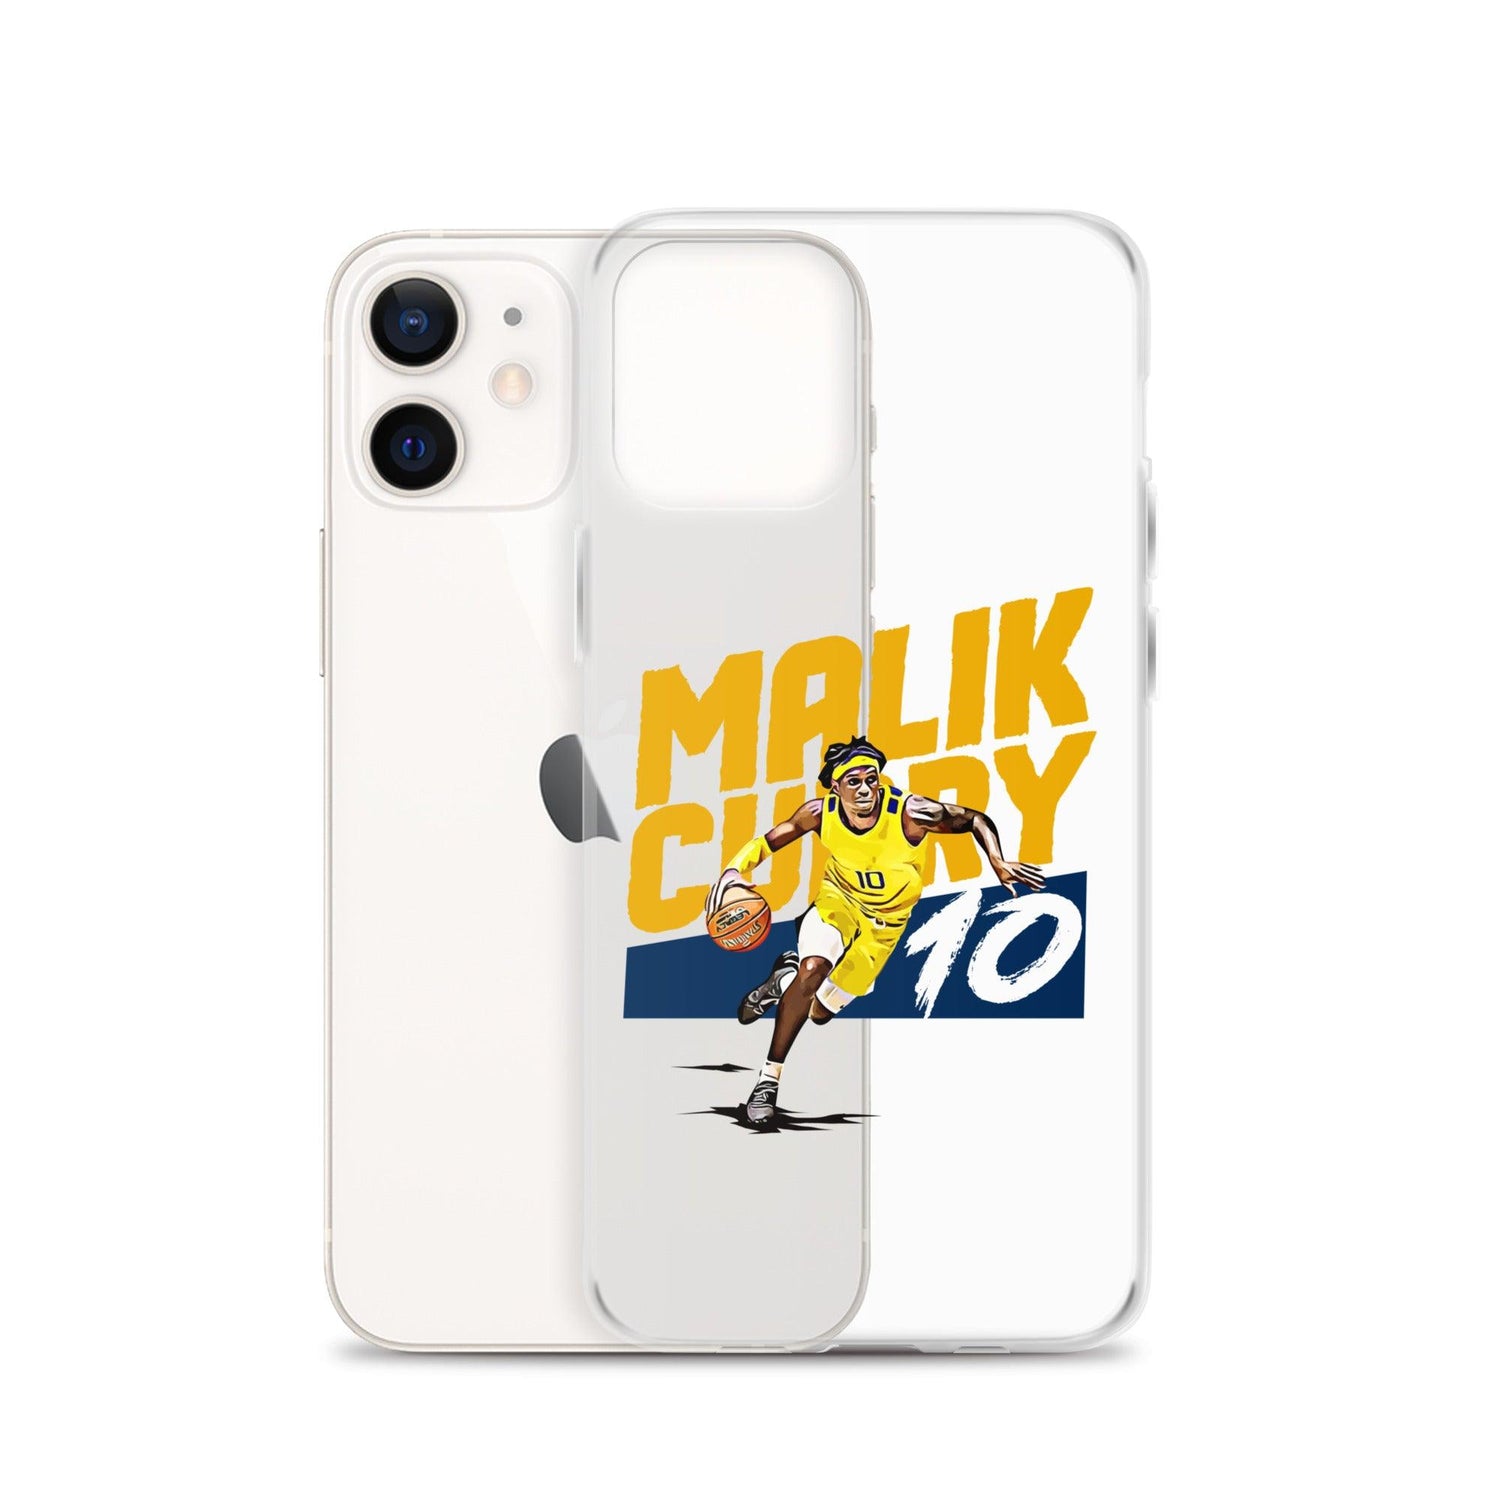 Malik Curry “Essential” iPhone Case - Fan Arch